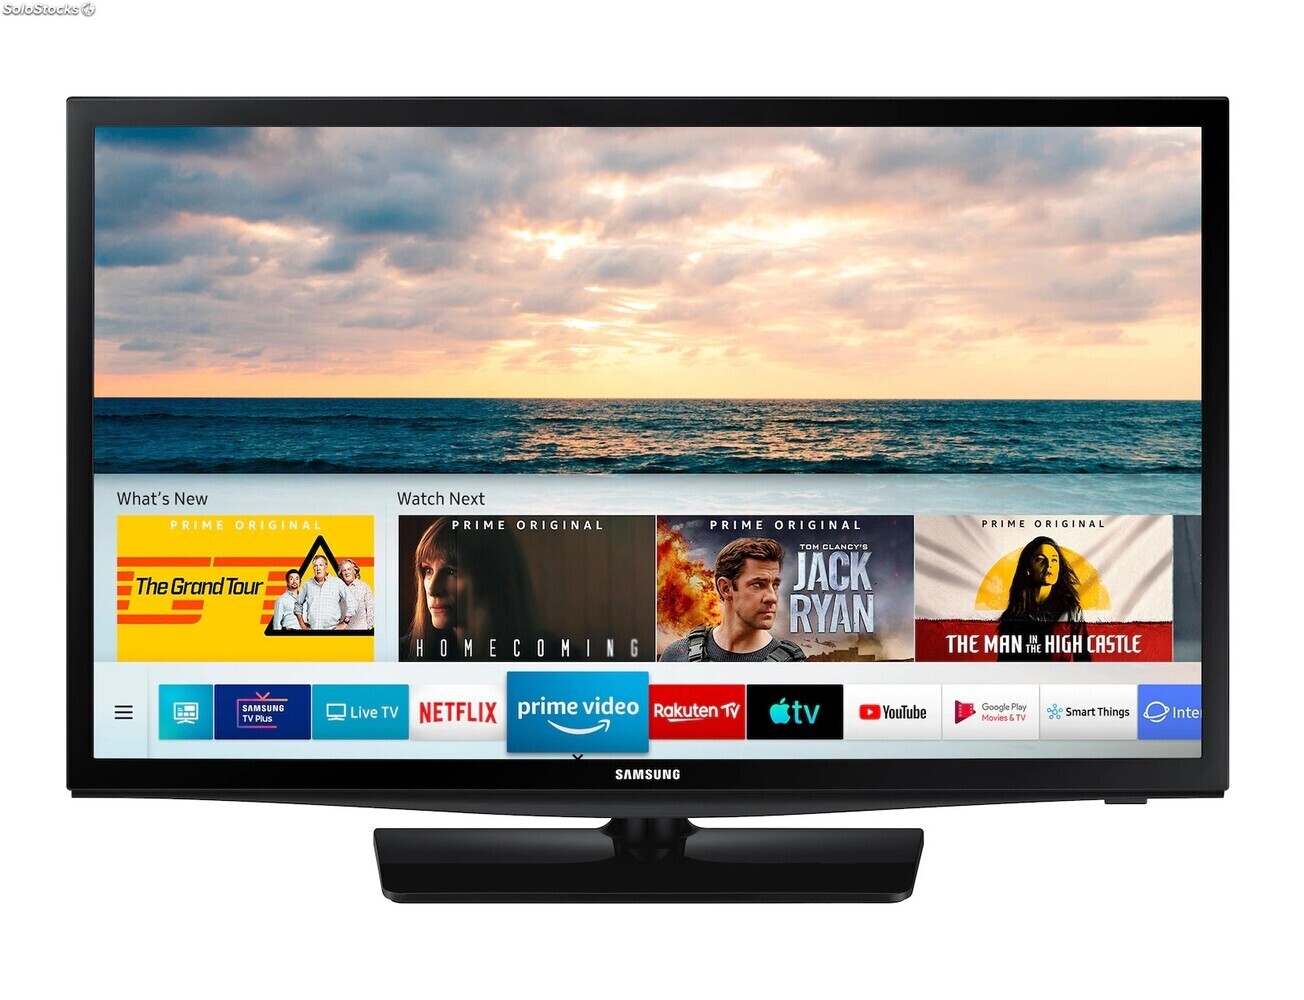 Televisor LED 32 Samsung UE32T5305, Full HD, HDR y Smart TV, color Negro